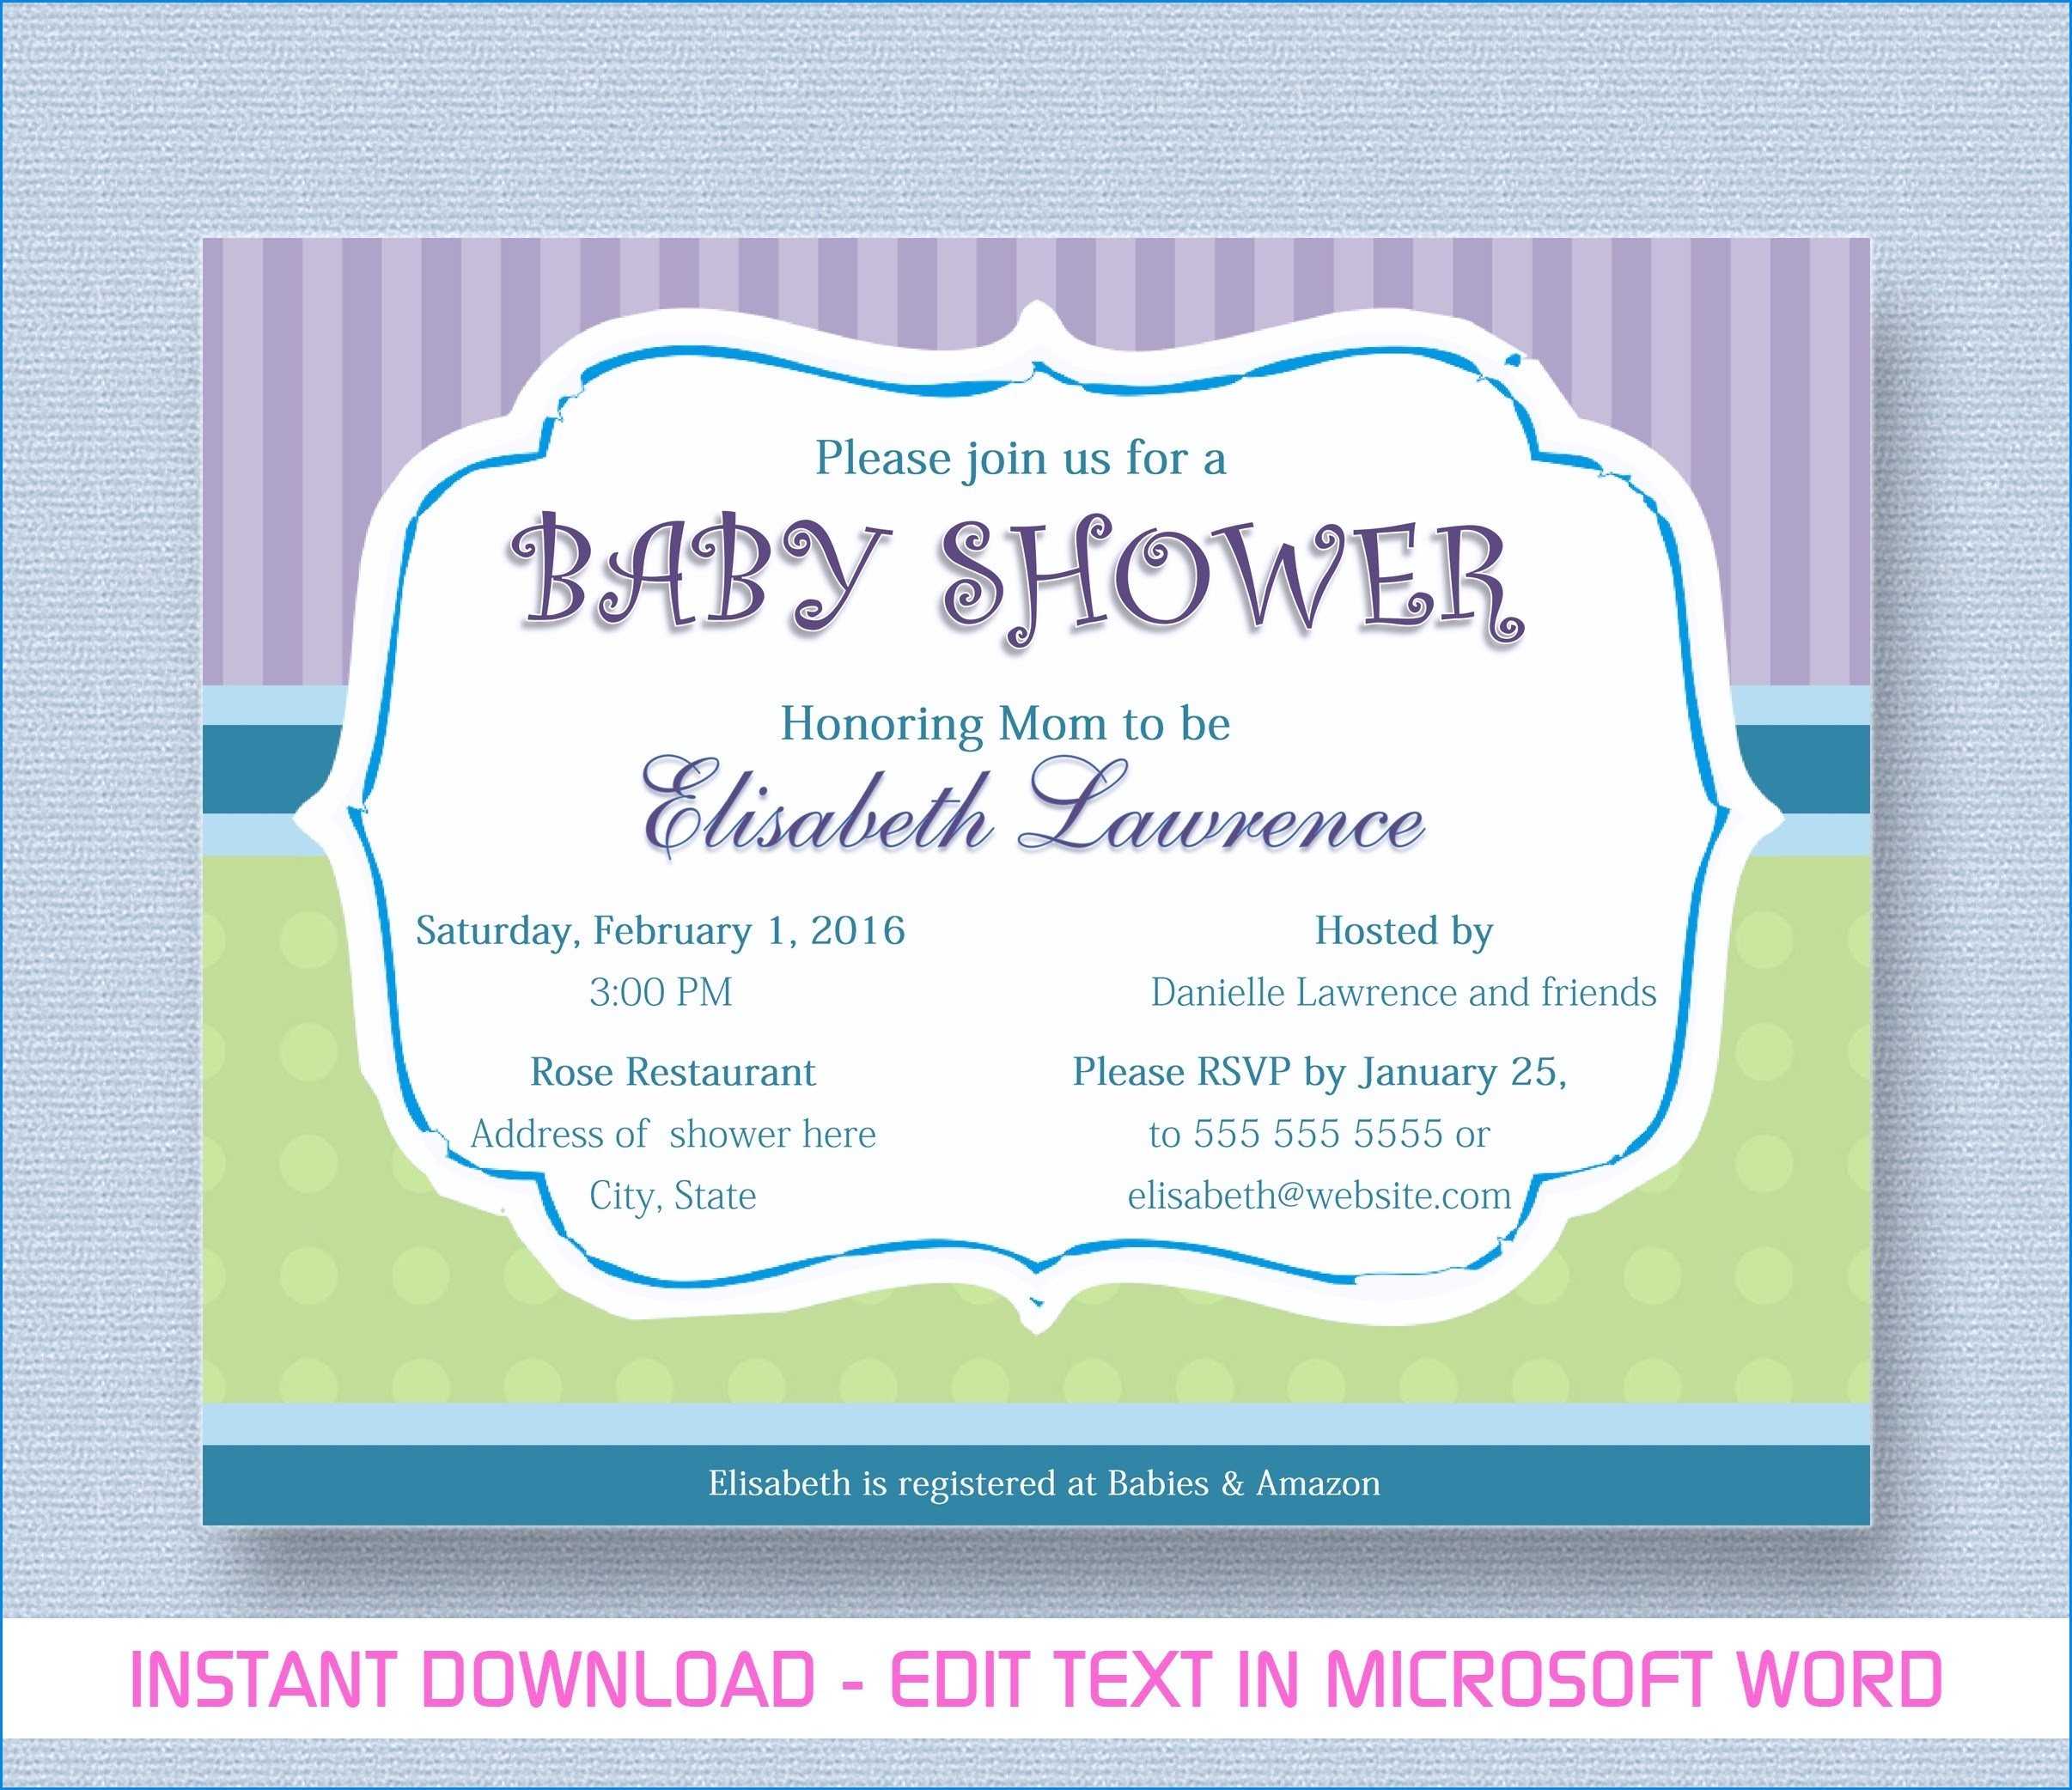 Baby Shower Invitation Template Microsoft Word Five Ideas With Free Baby Shower Invitation Templates Microsoft Word